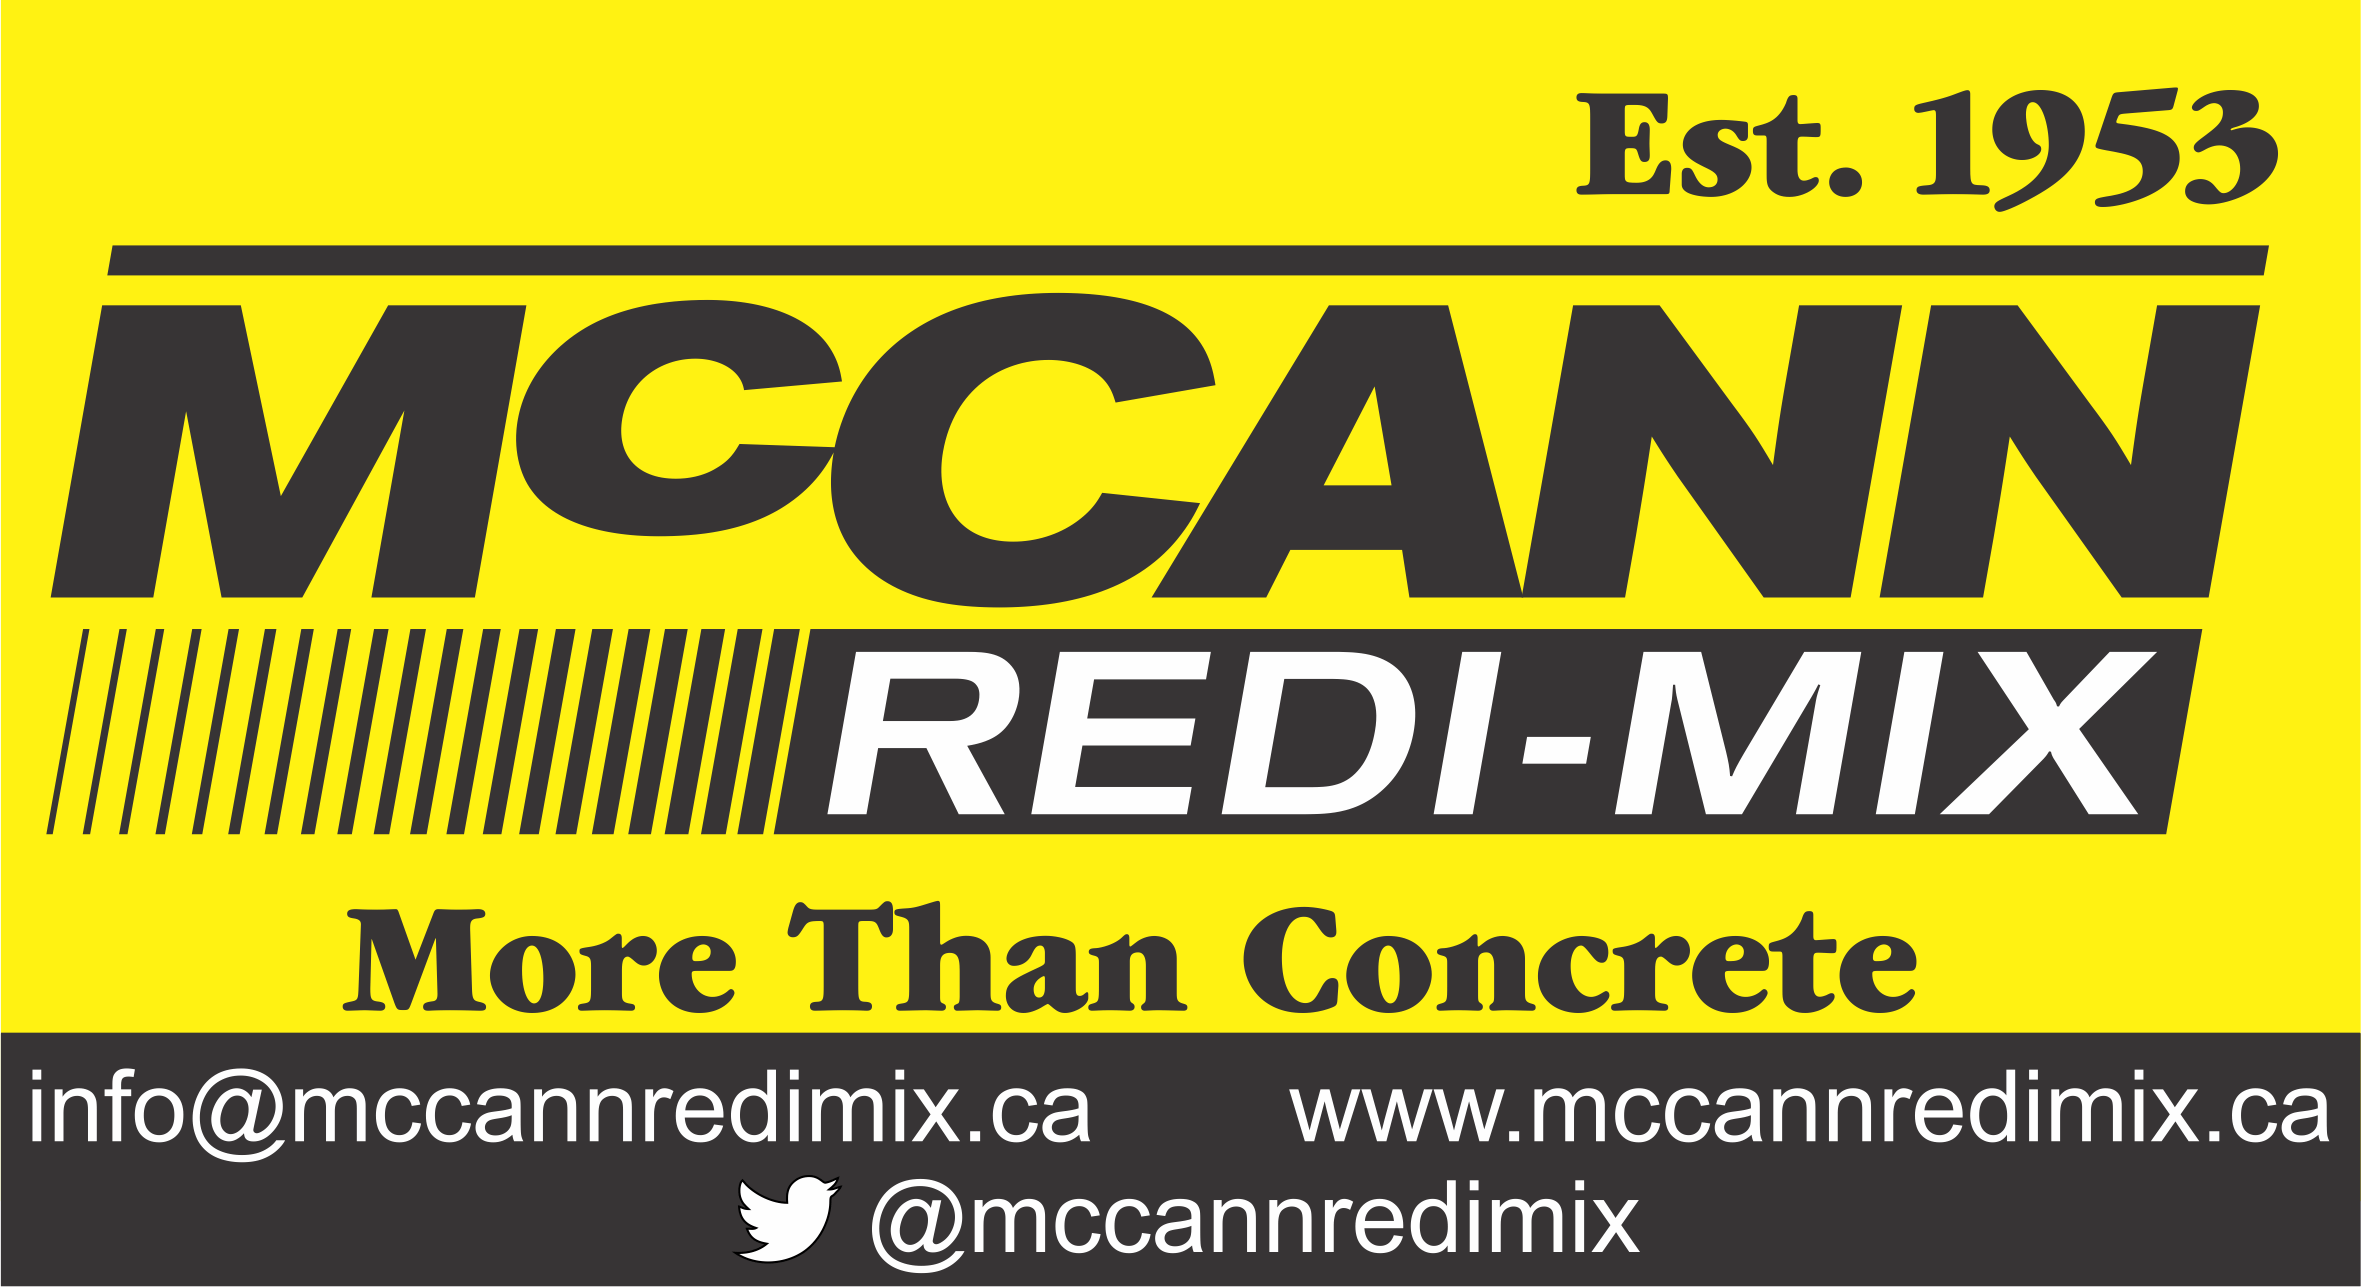 McCann Redimix